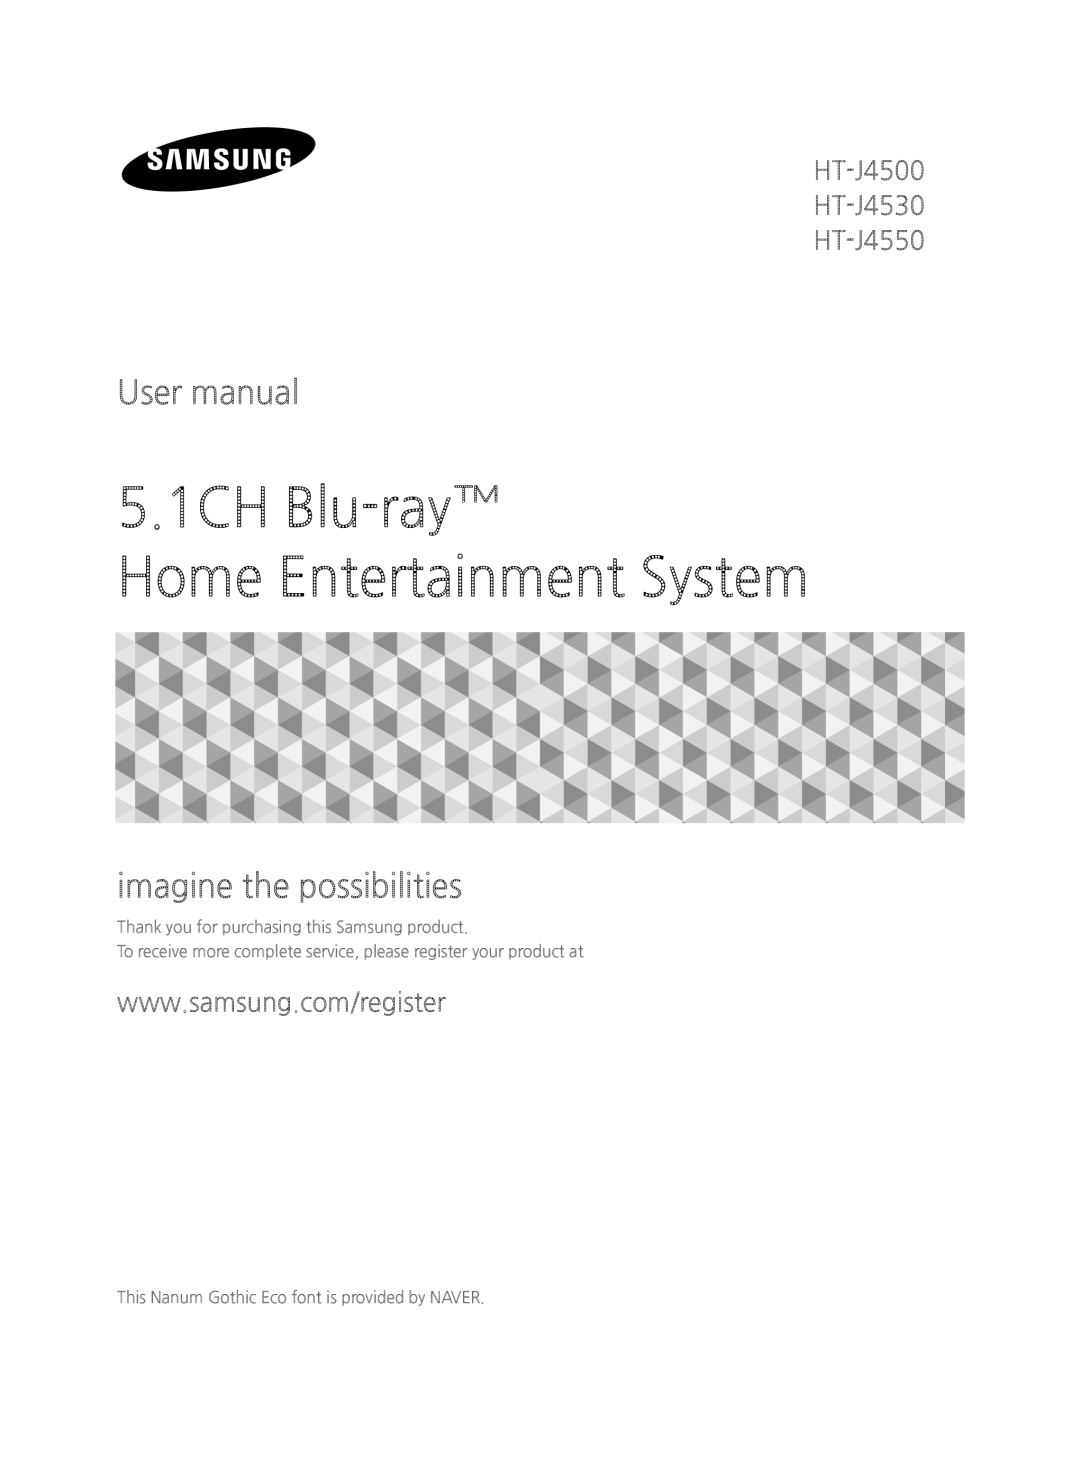 Samsung HT-J4530/EN, HT-J4550/EN manual 5.1CH Blu-ray Home Entertainment System, User manual, imagine the possibilities 